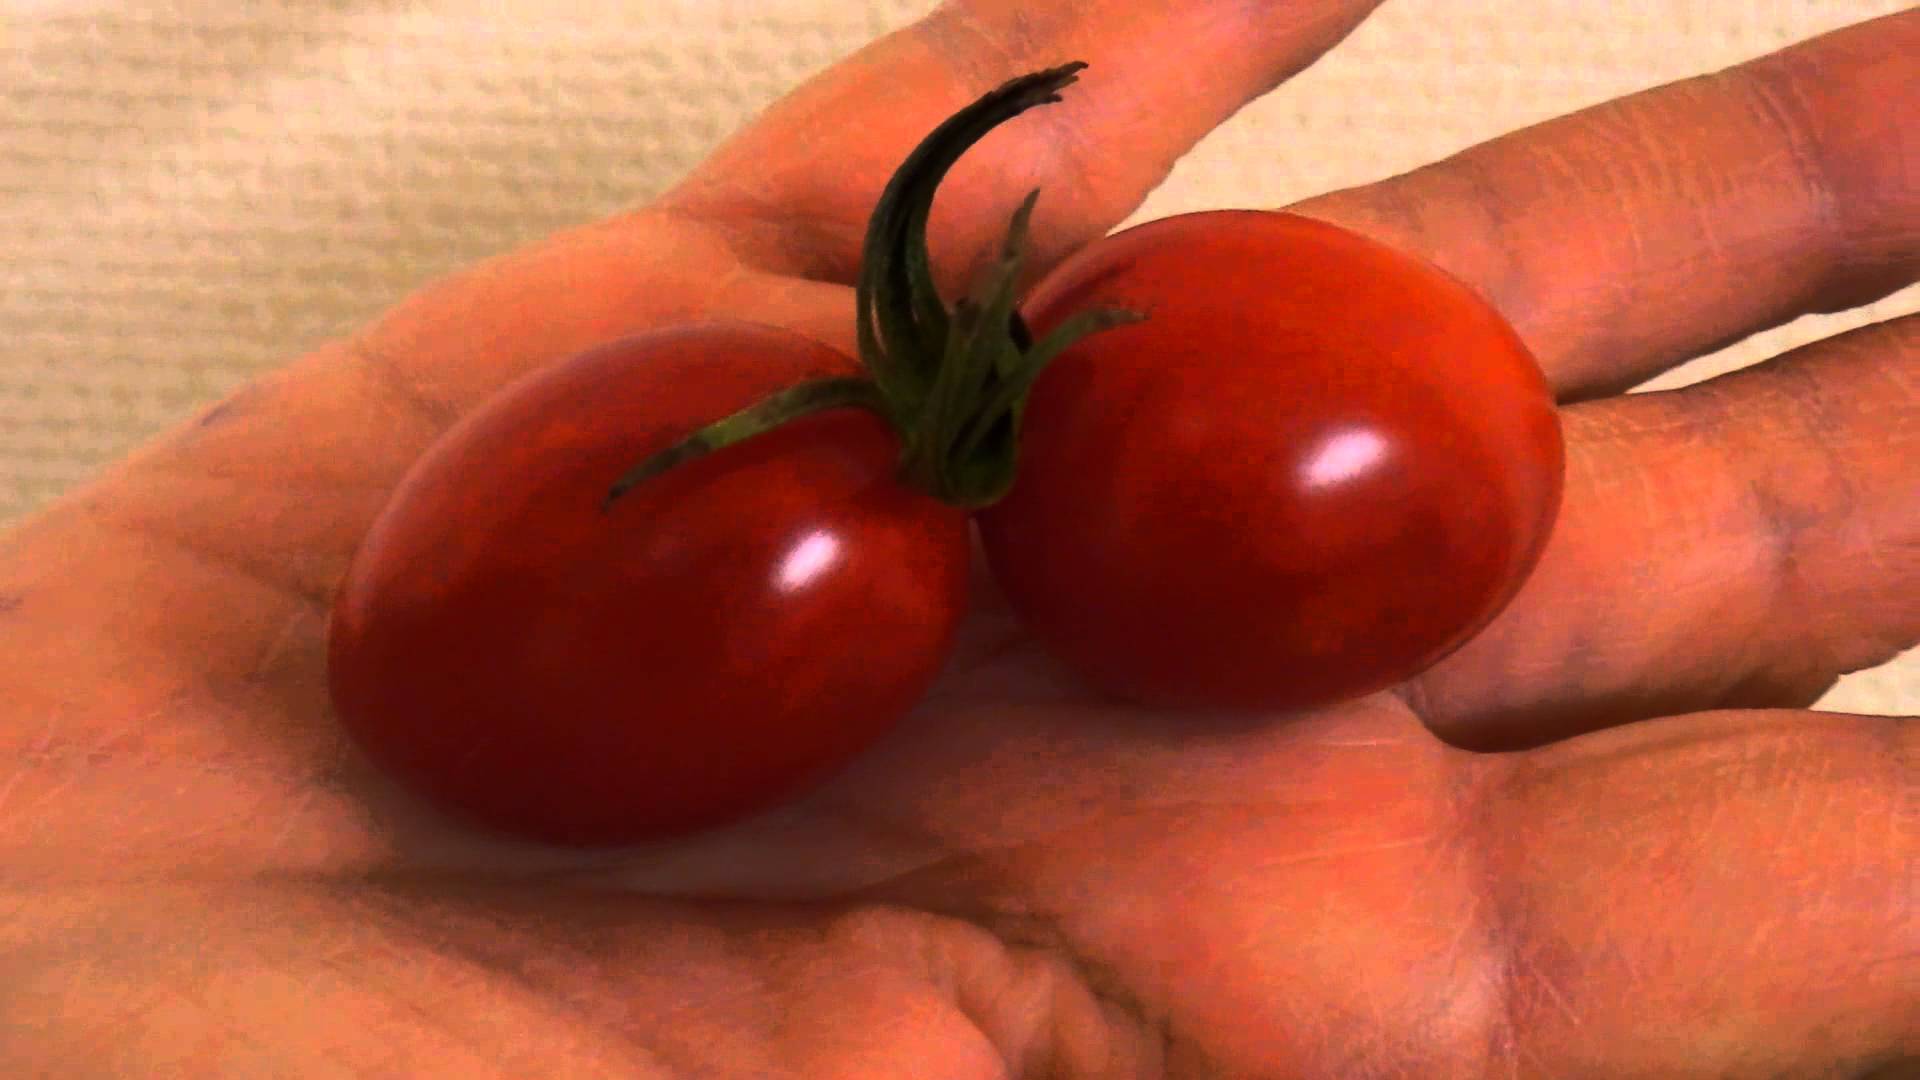 Rare twin tomatoes - YouTube